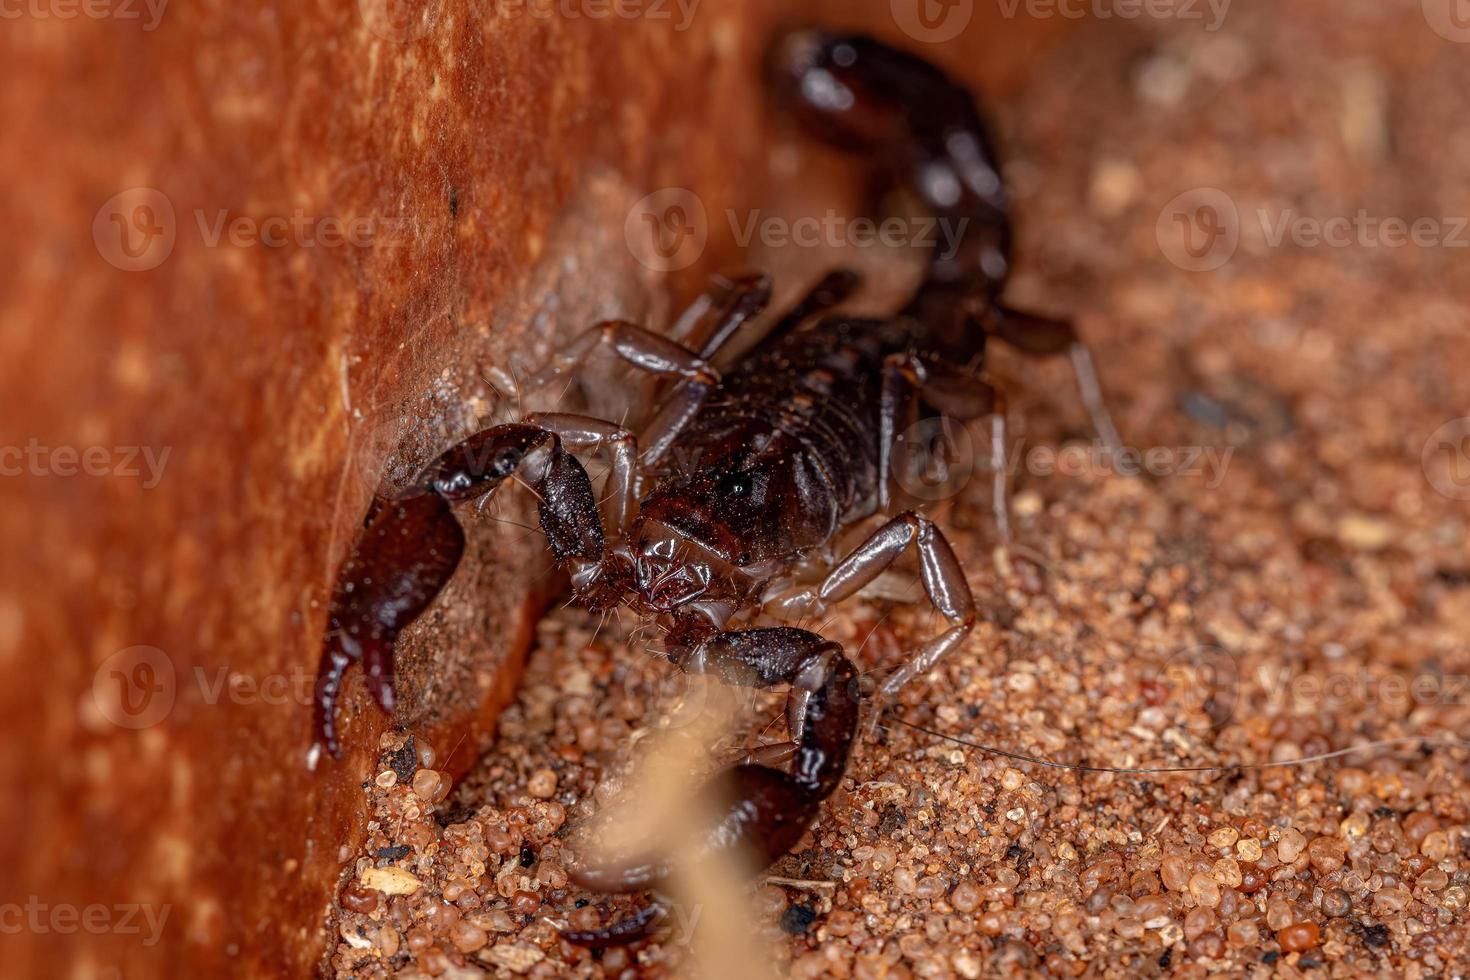 scorpion noir adulte photo